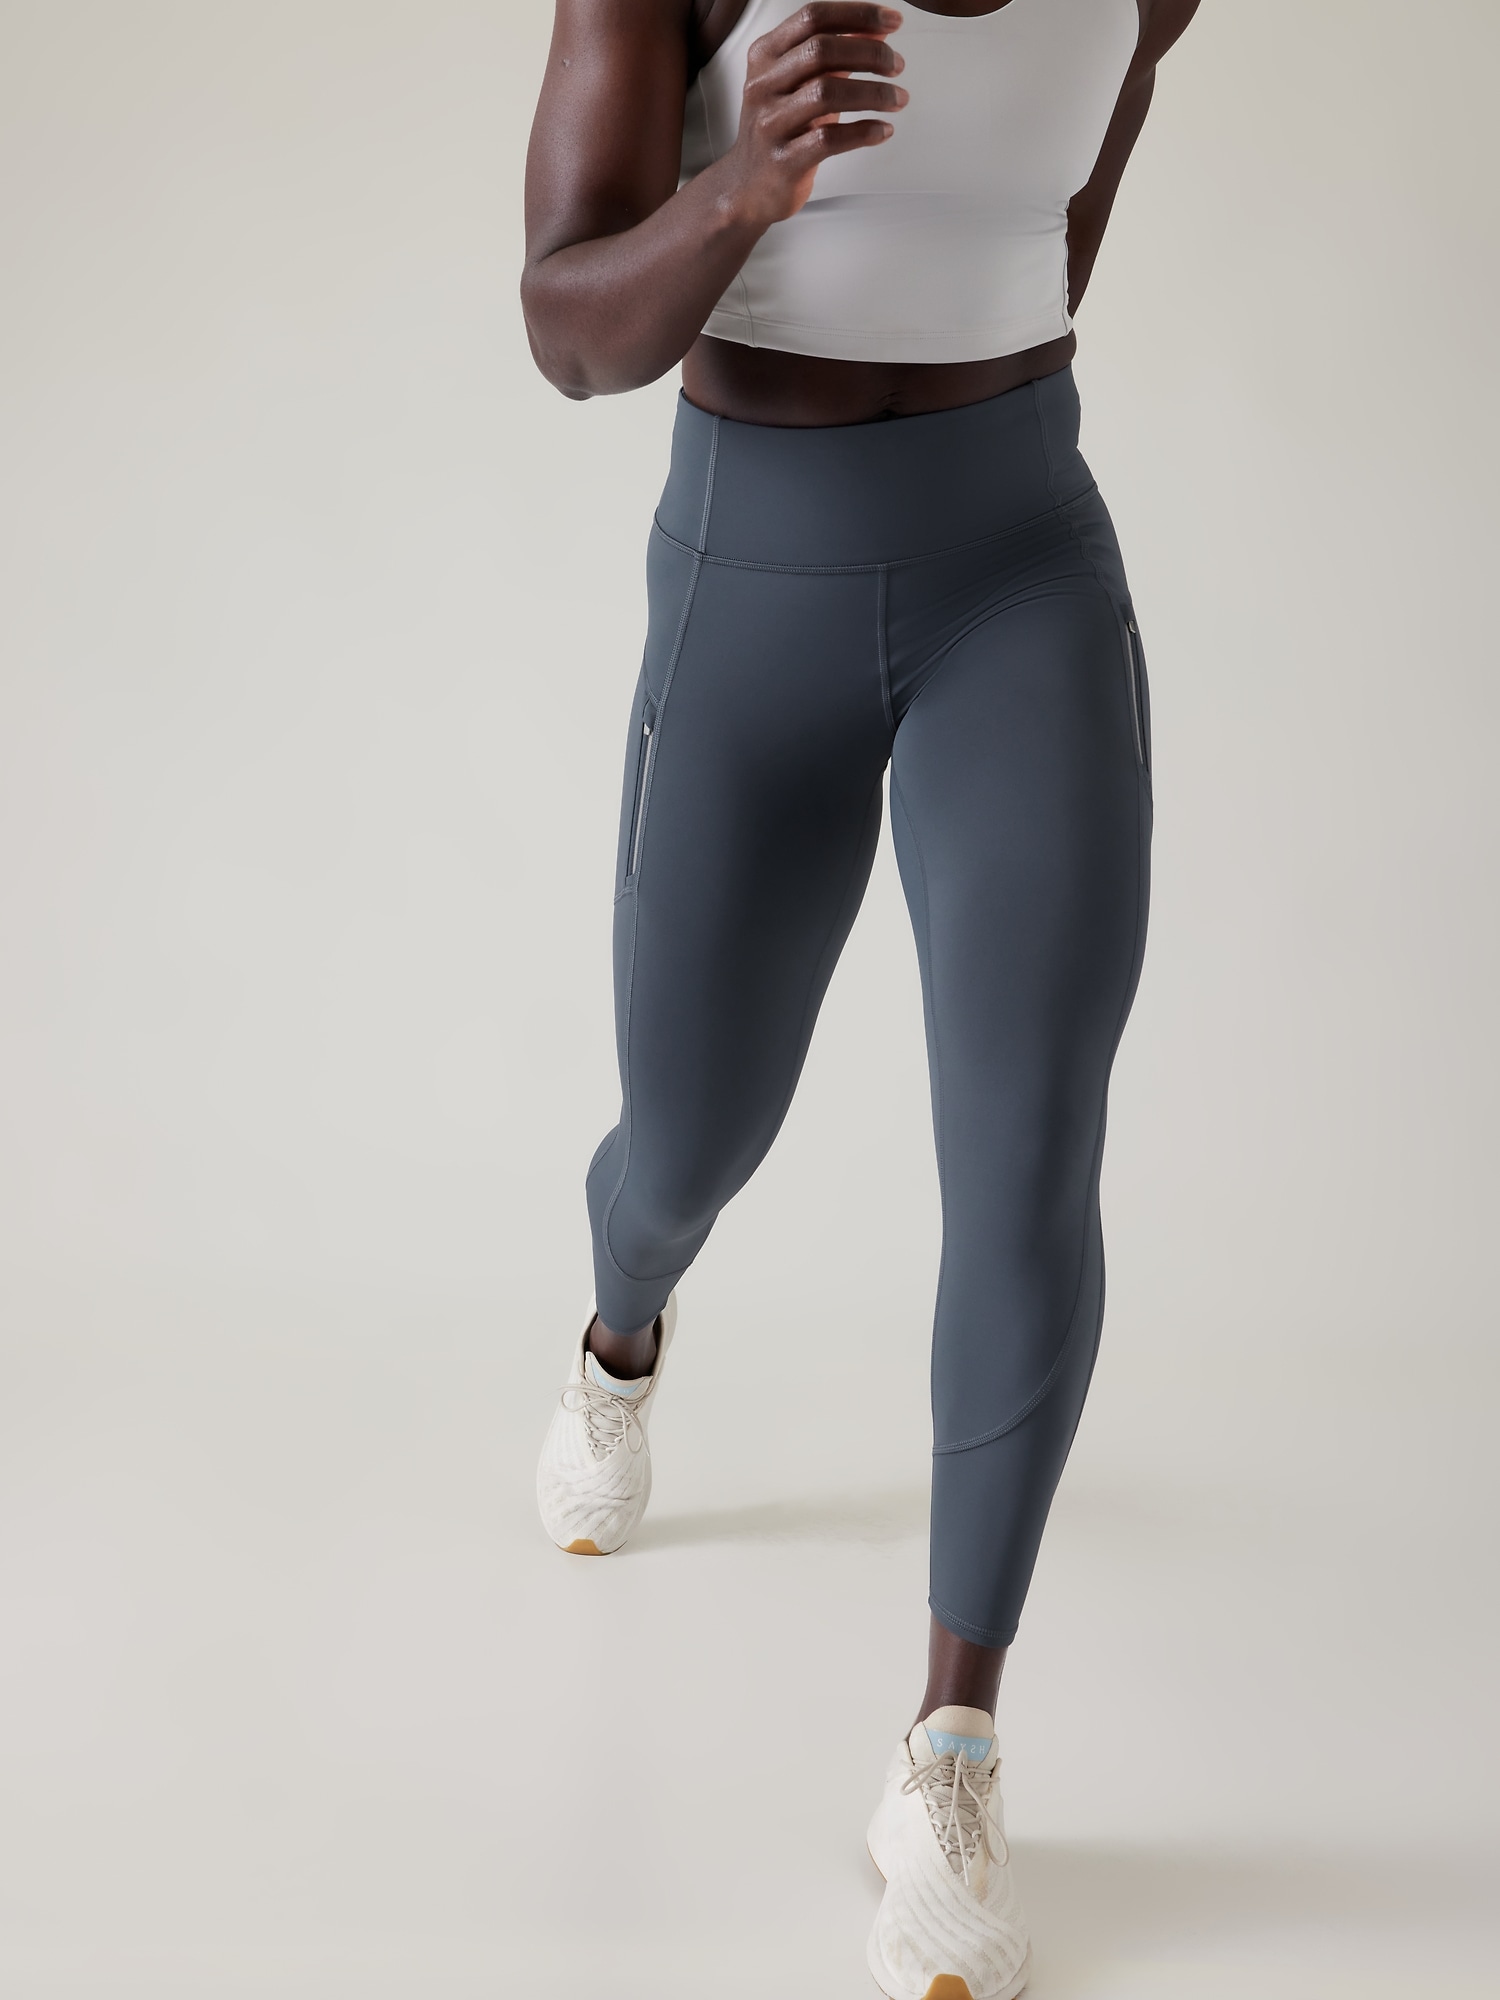 Athleta NWT Women's Rainier Tight Size XLarge Color Decadent Chocolate